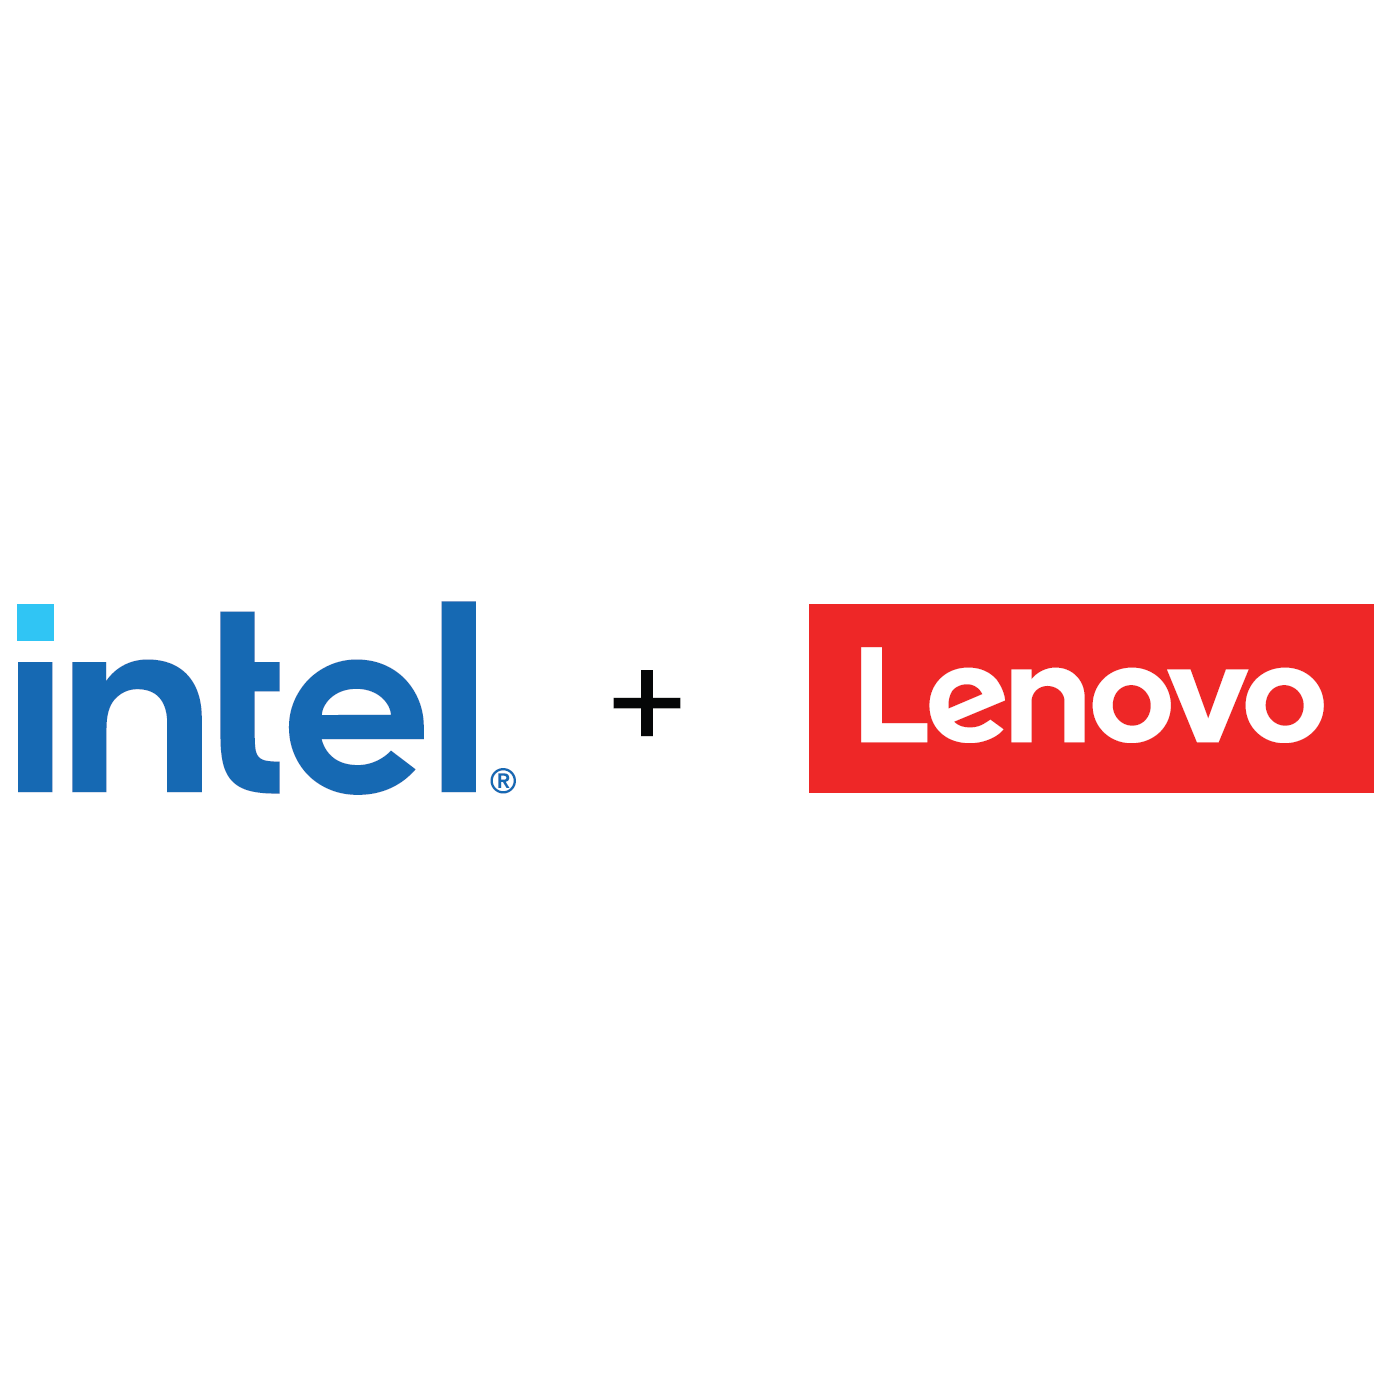 Lenovo + Intel Brand Logos